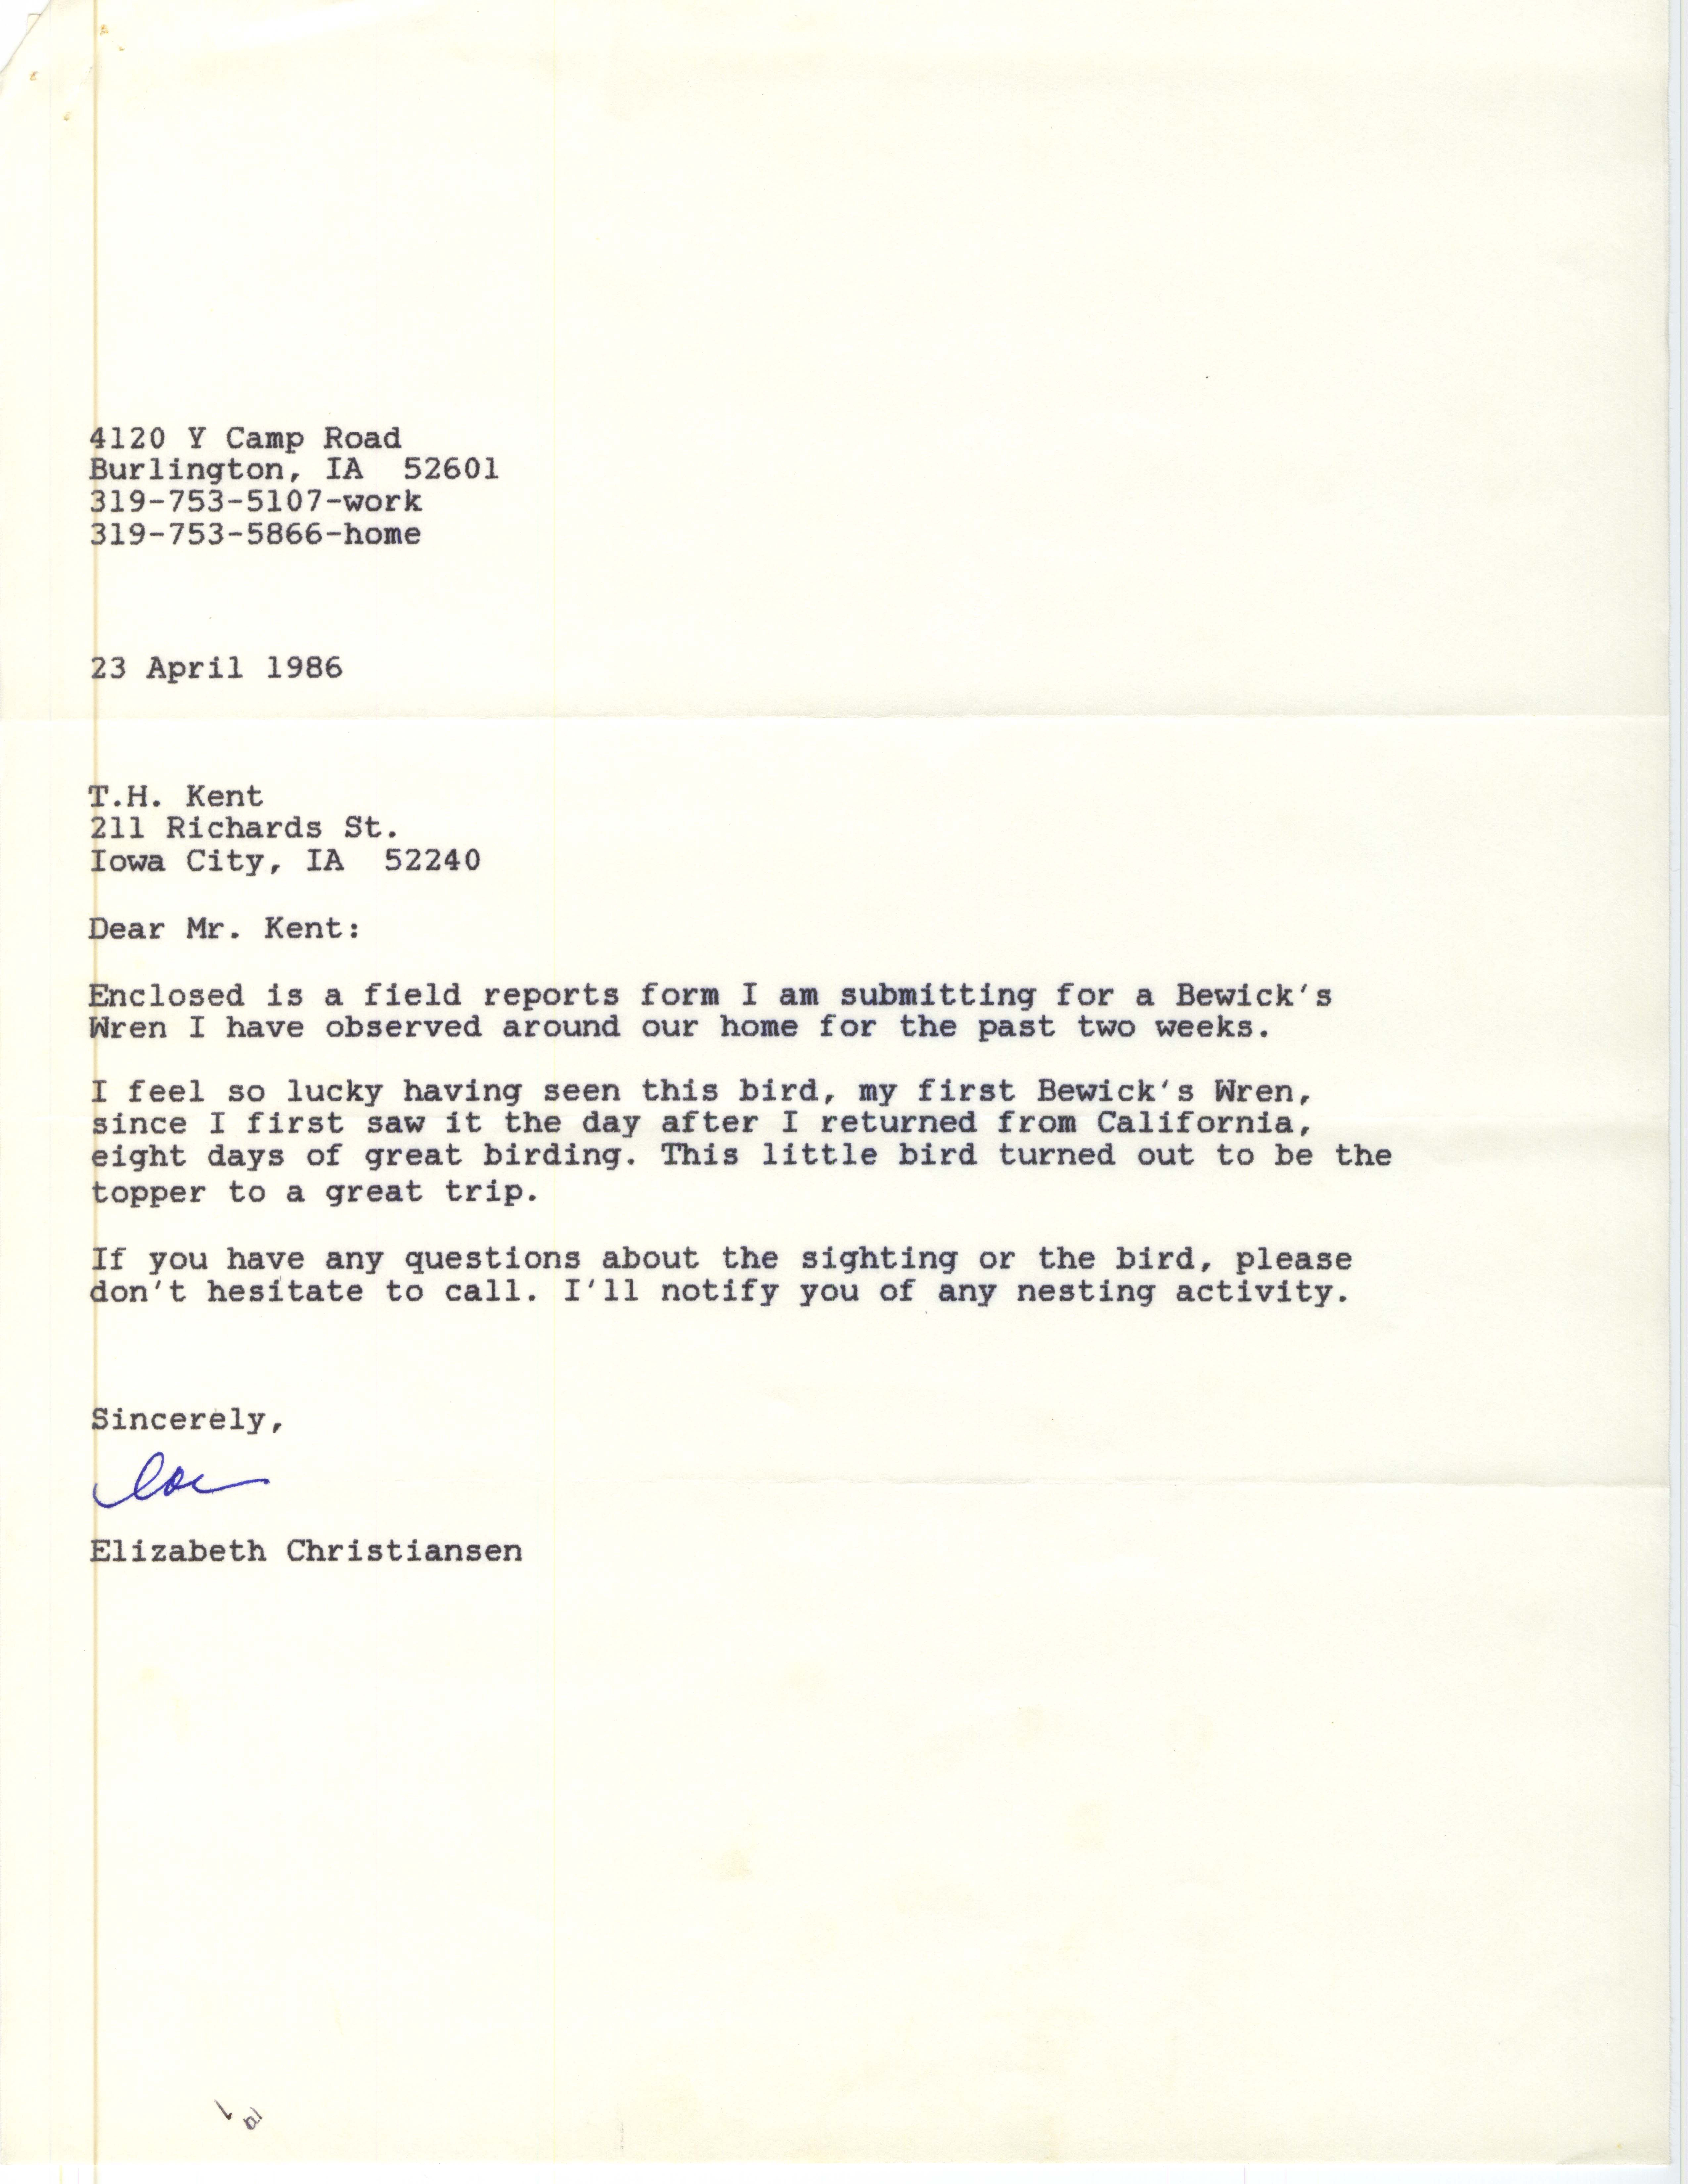 Elizabeth Christiansen letter to Thomas Kent regarding Bewick's Wren, April 23, 1986